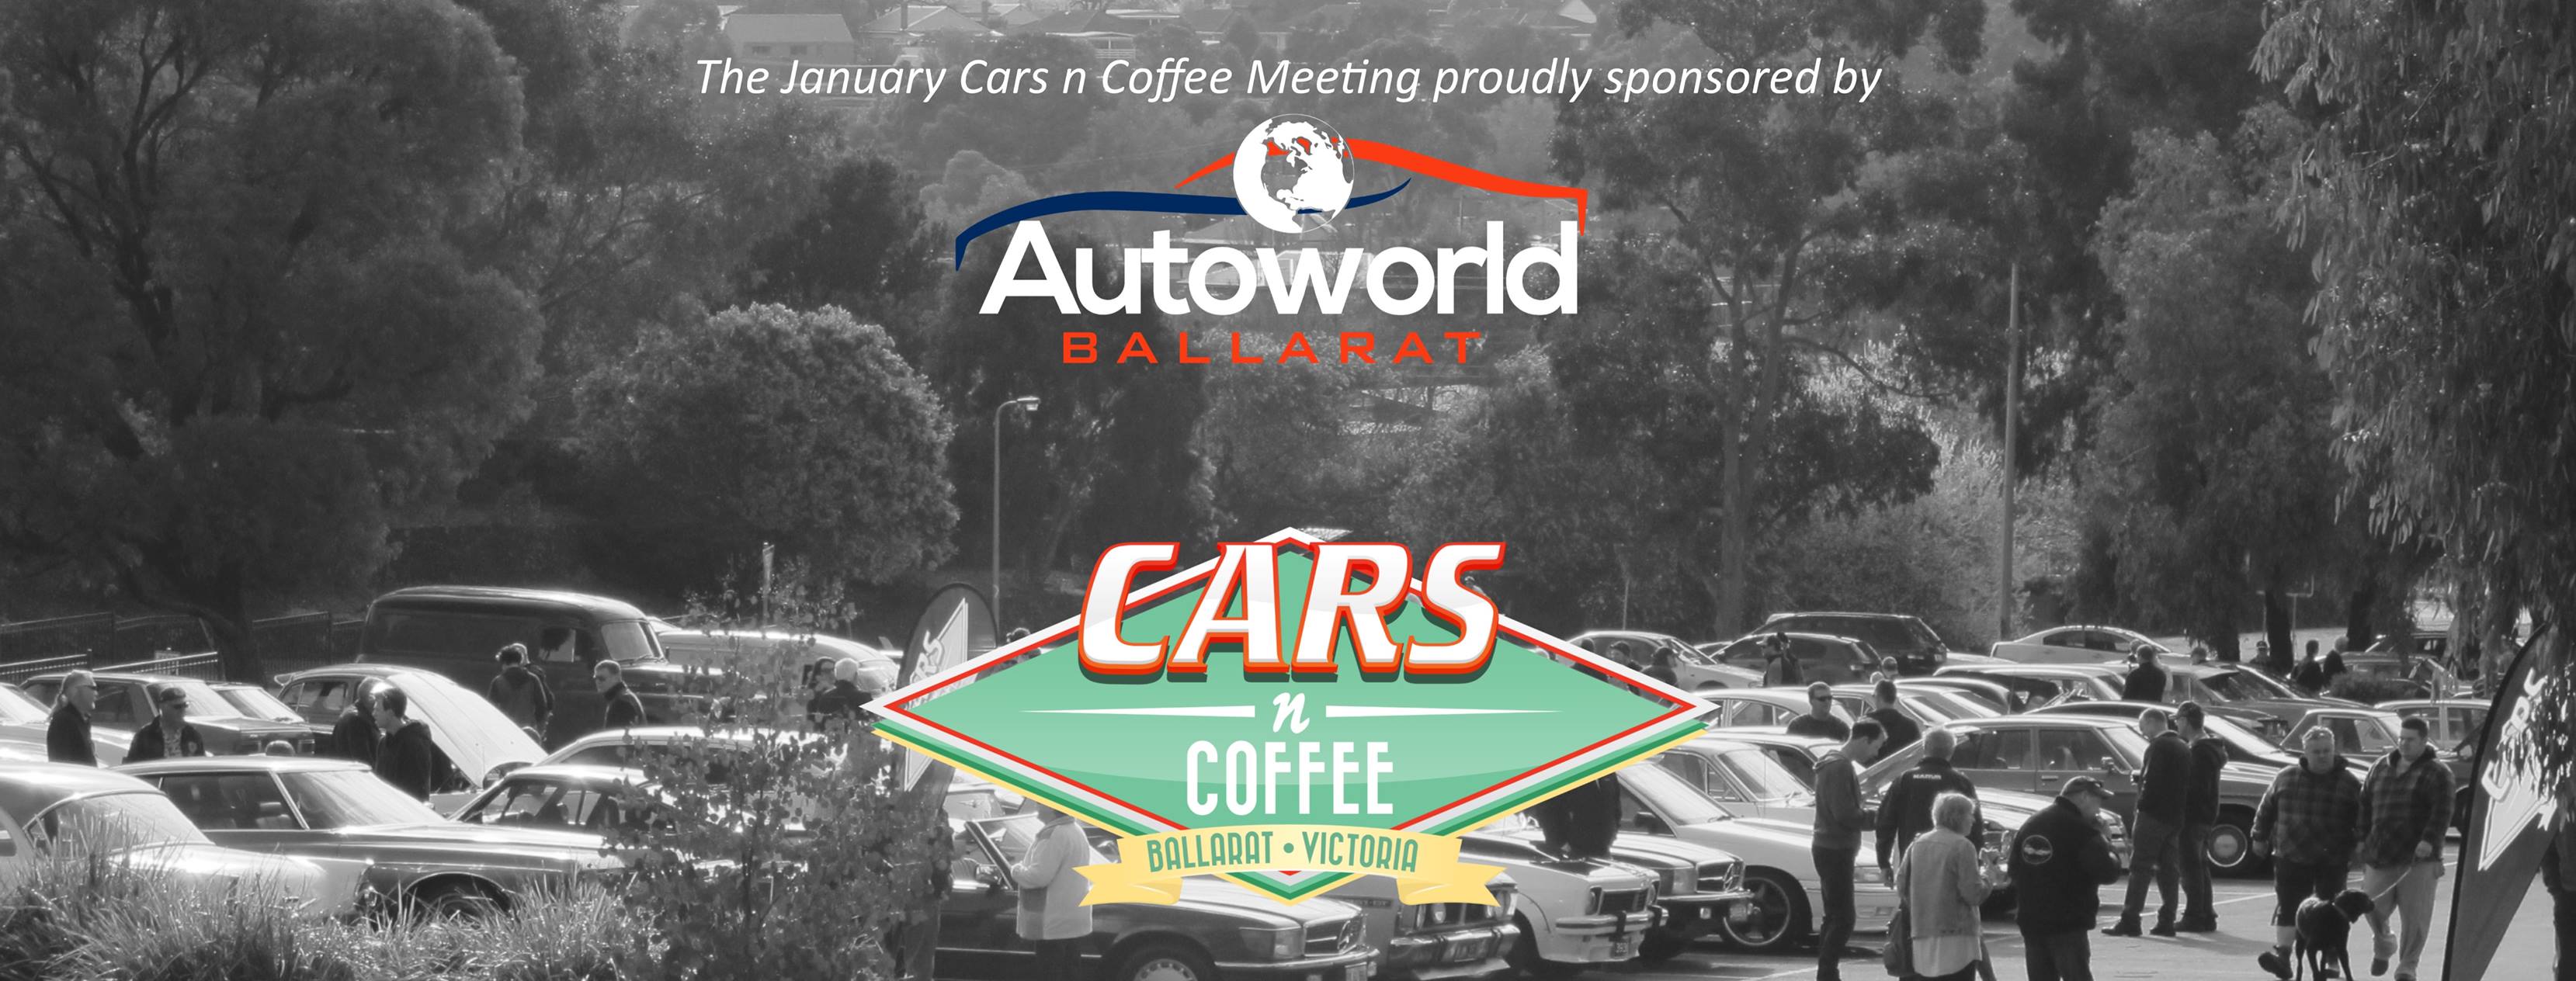 Ballarat Cars n Coffee January 2019 Meeting [VIC]